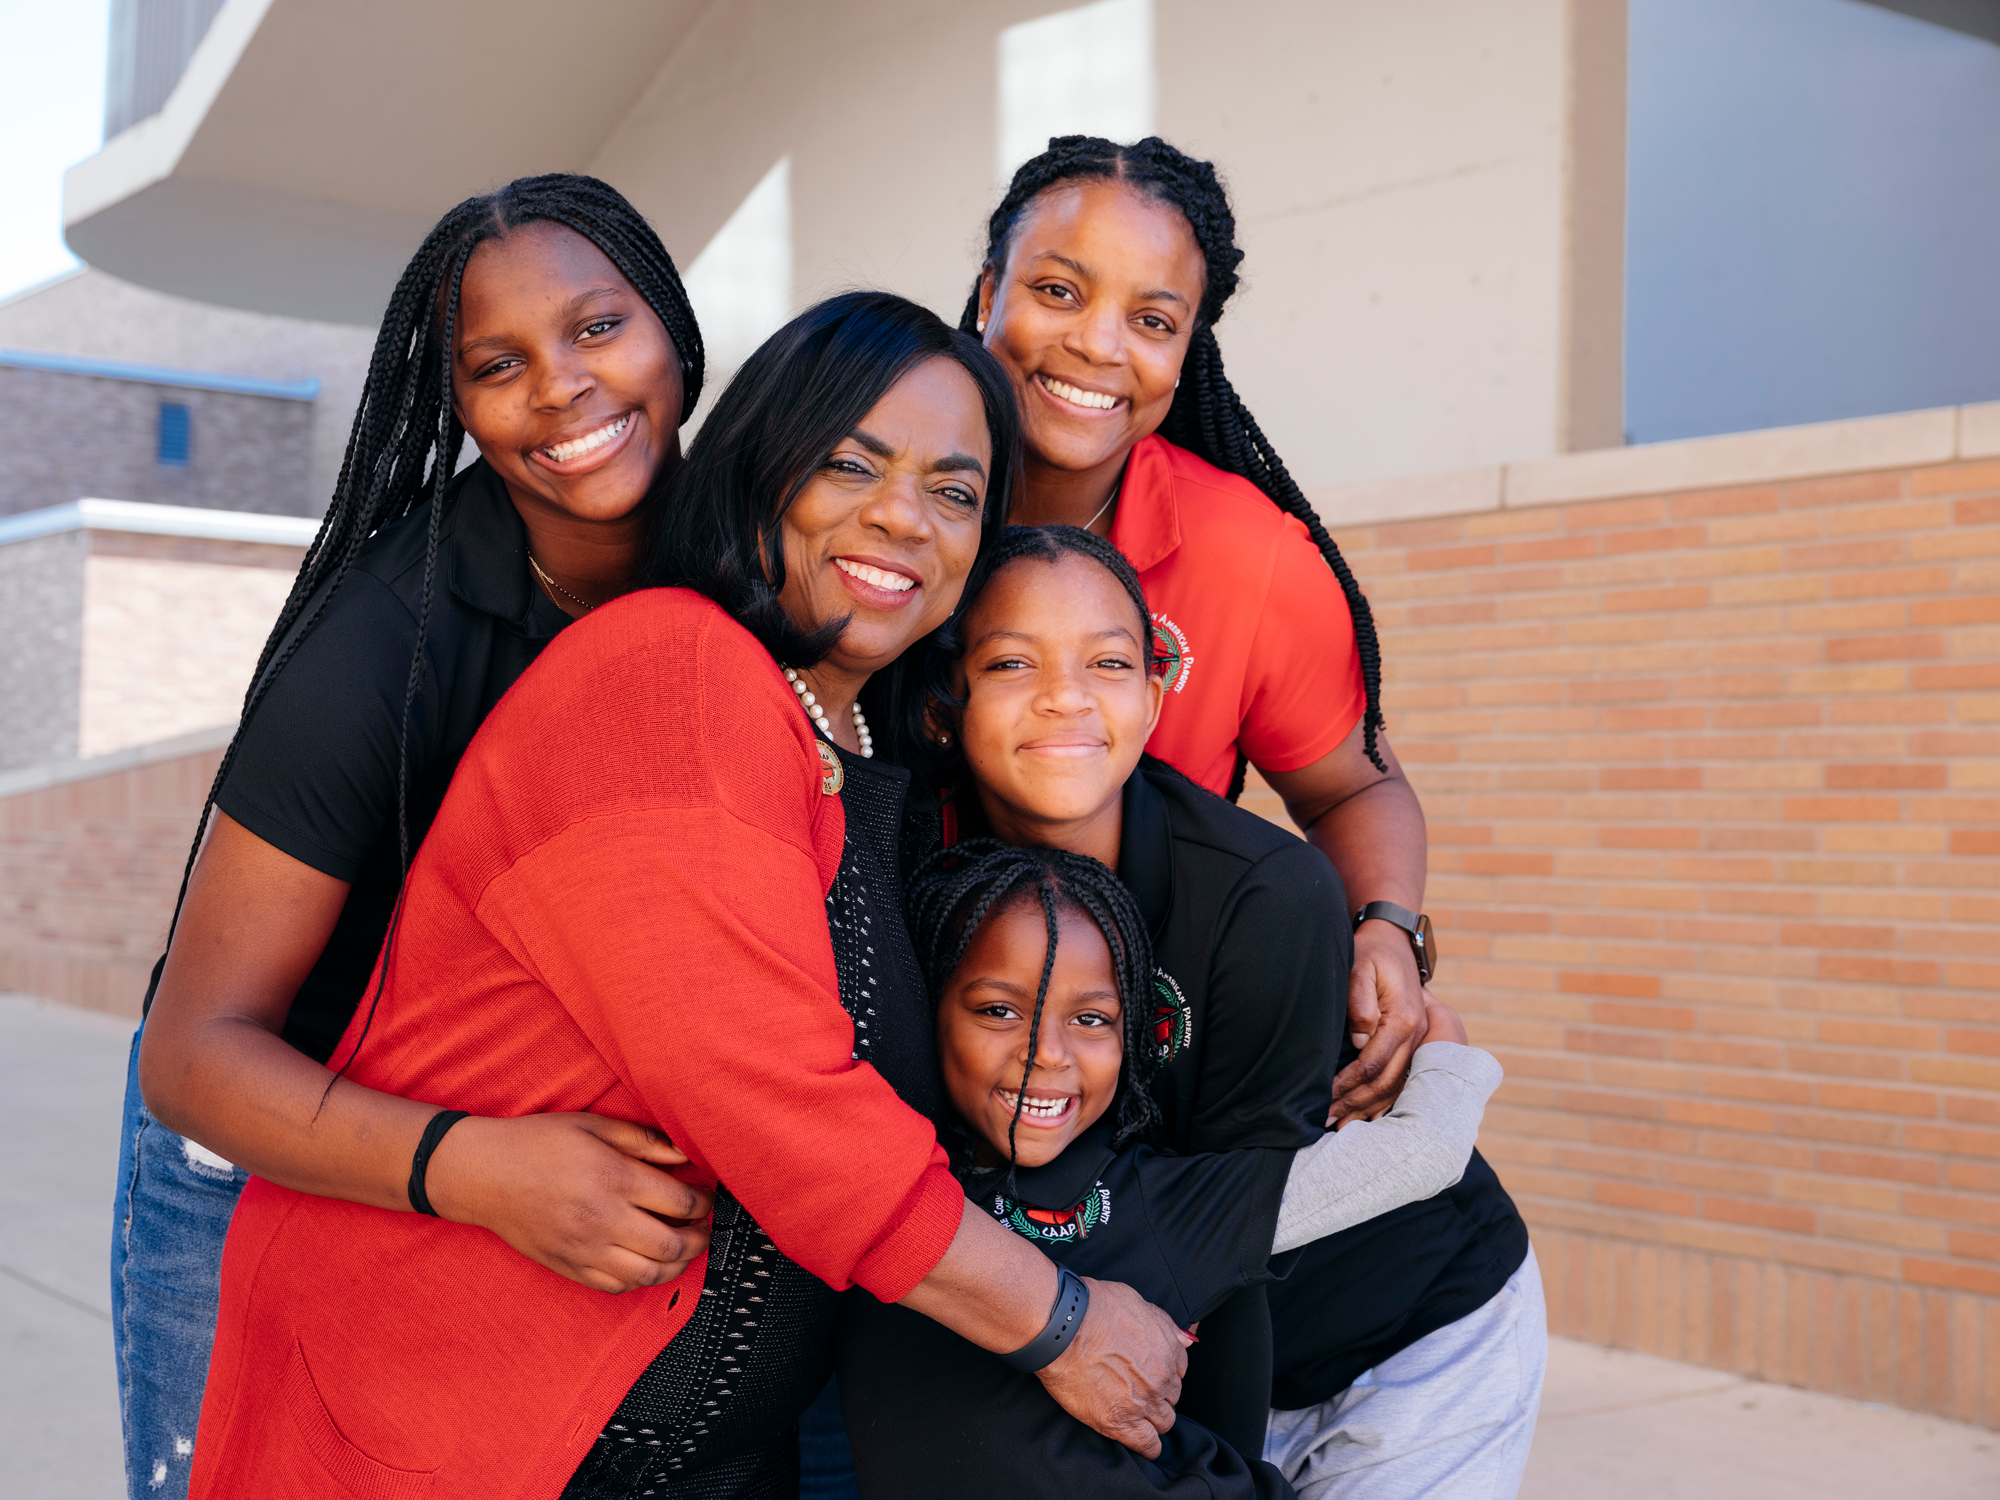 Ingrid Johnson, Raquel Rall, and Rall's three children hug